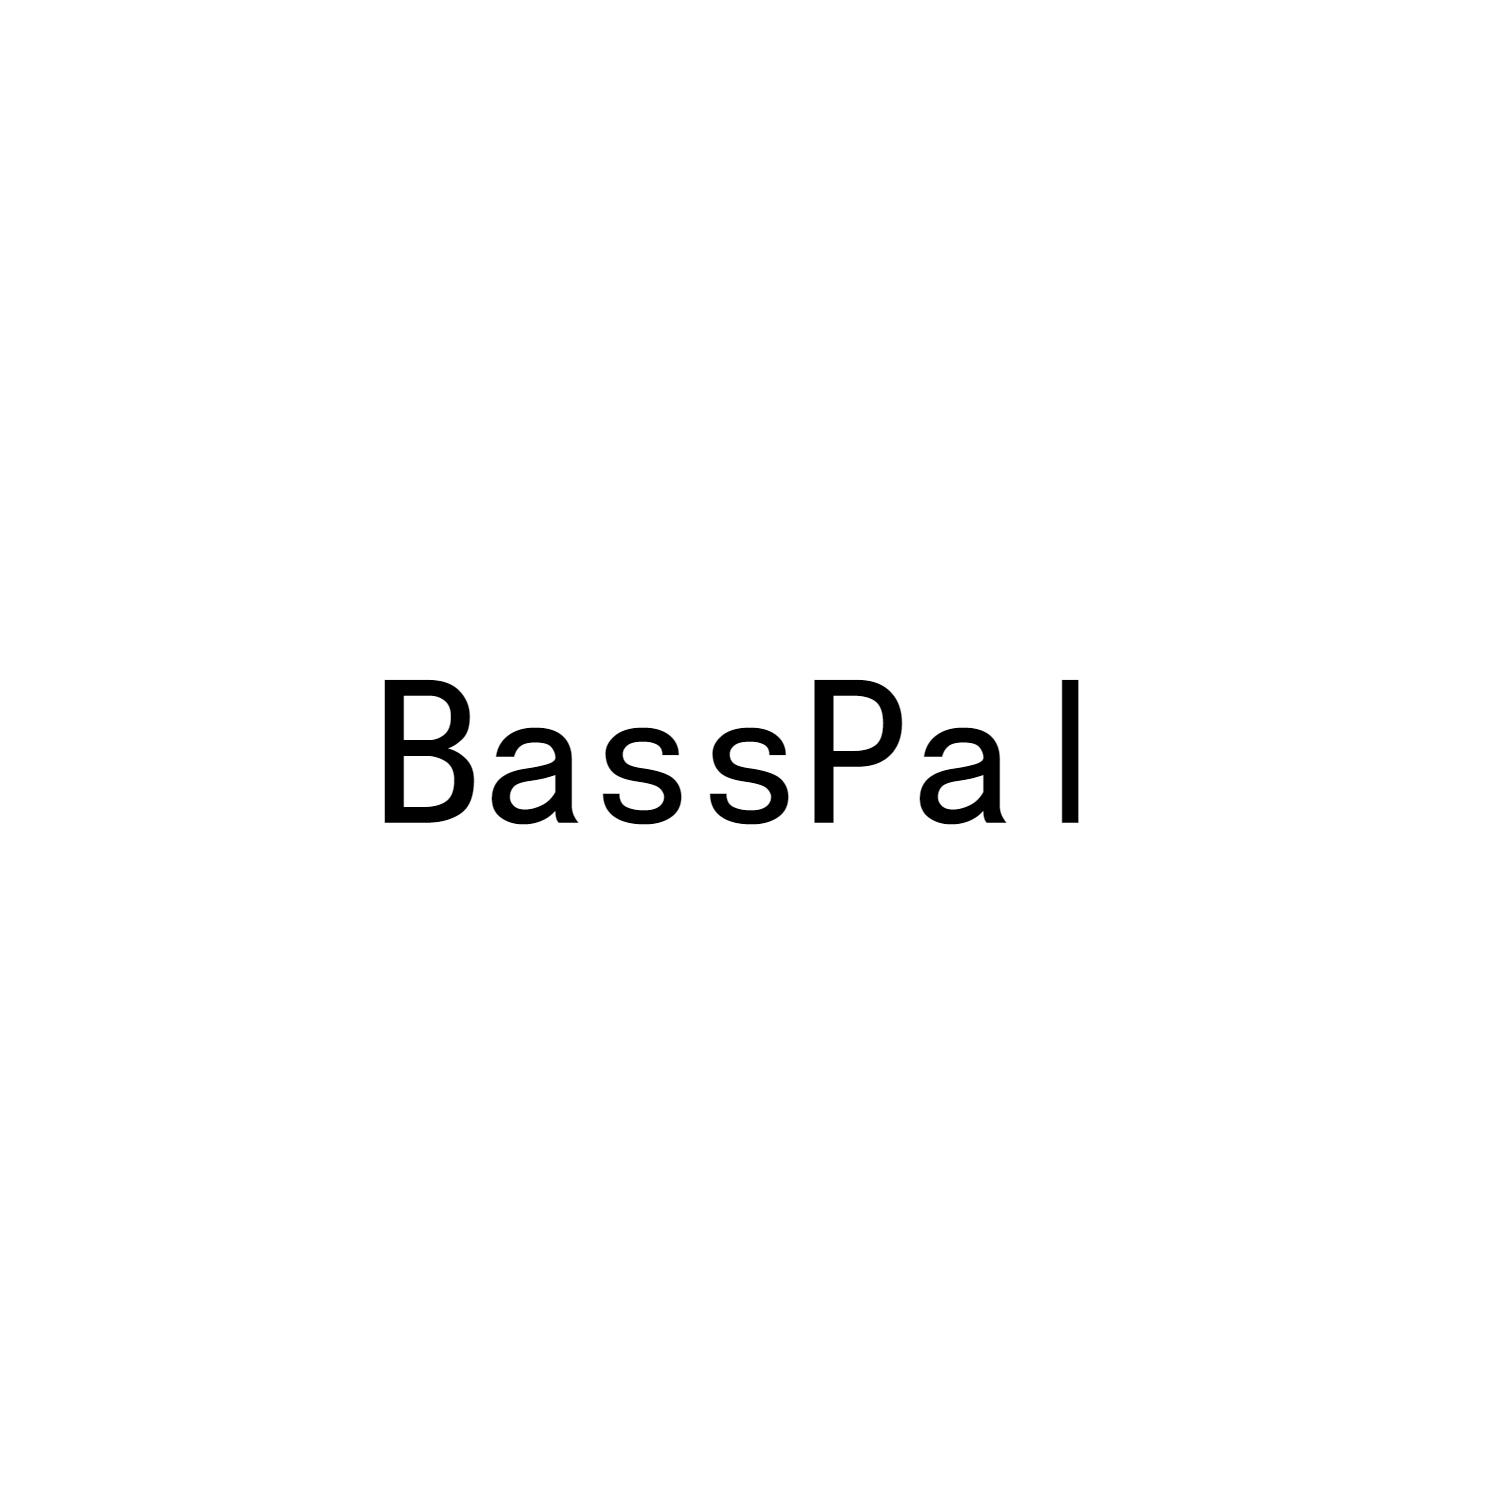 BASSPAL